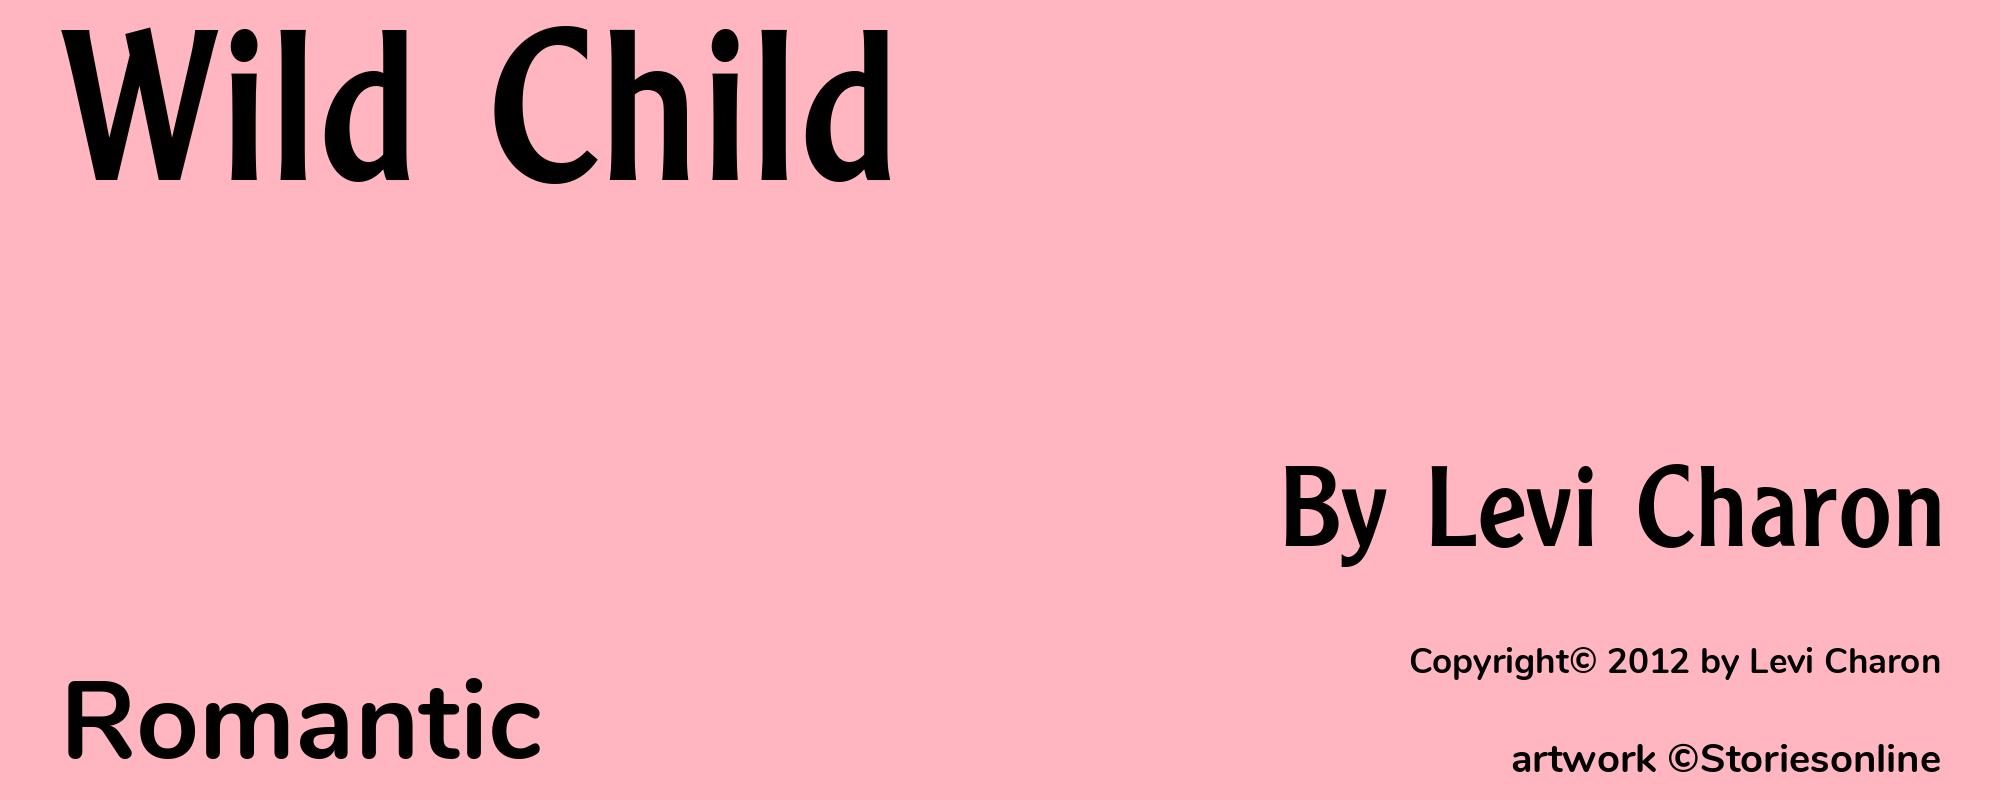 Wild Child - Cover